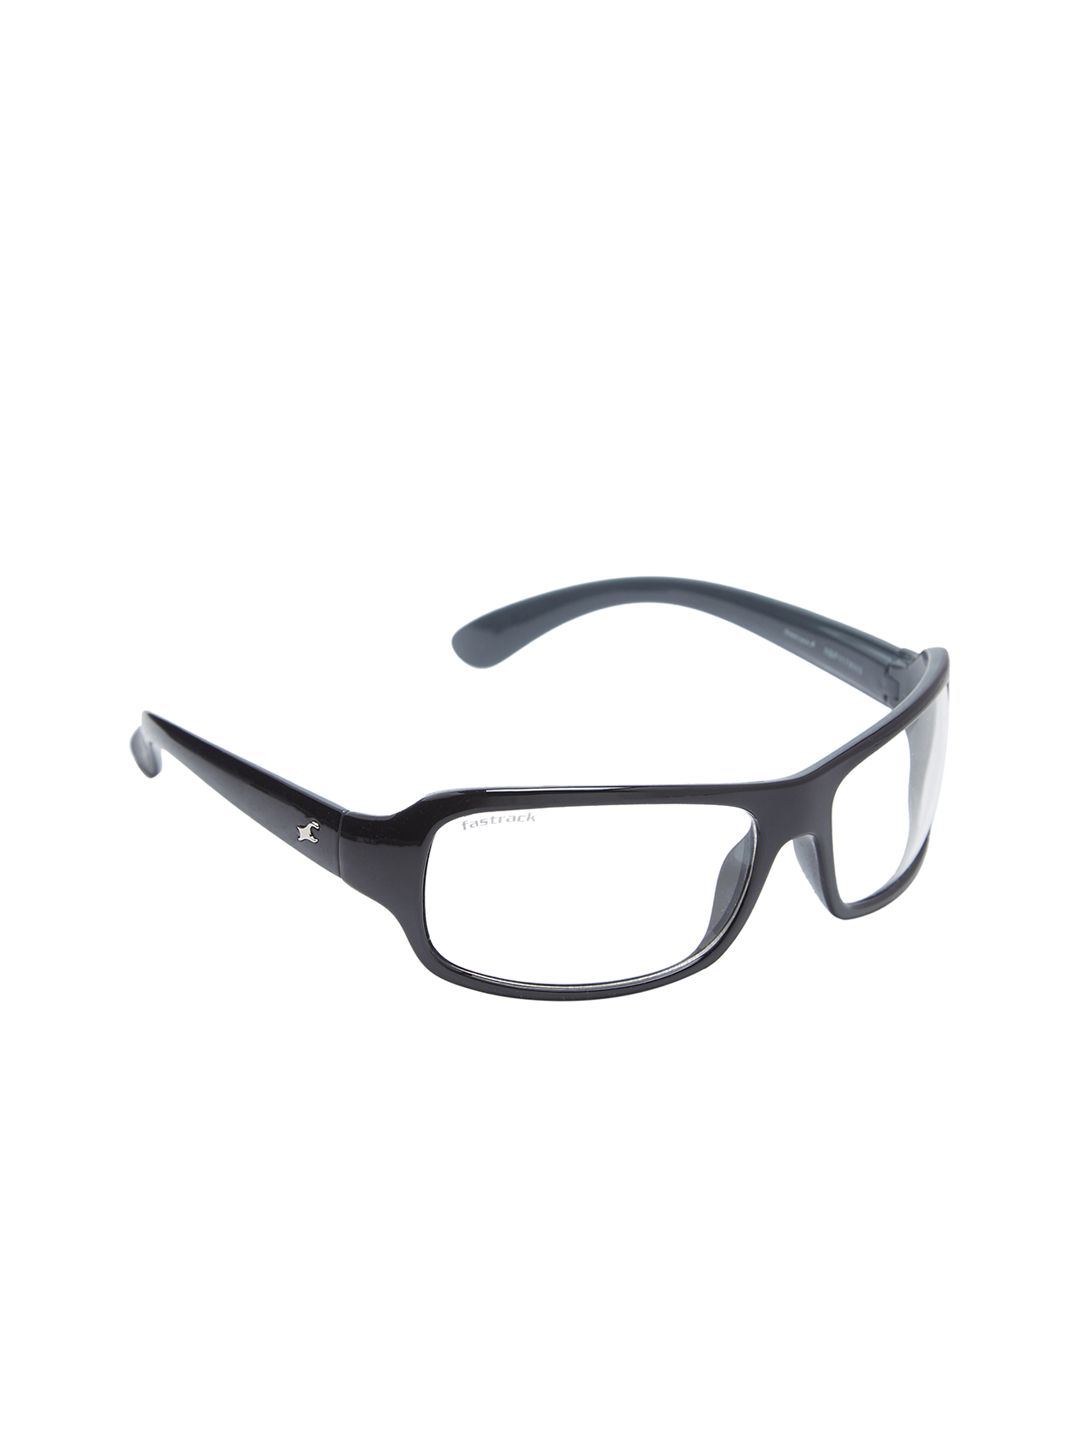 Fastrack Unisex Sports Sunglasses P117WH3 Price in India